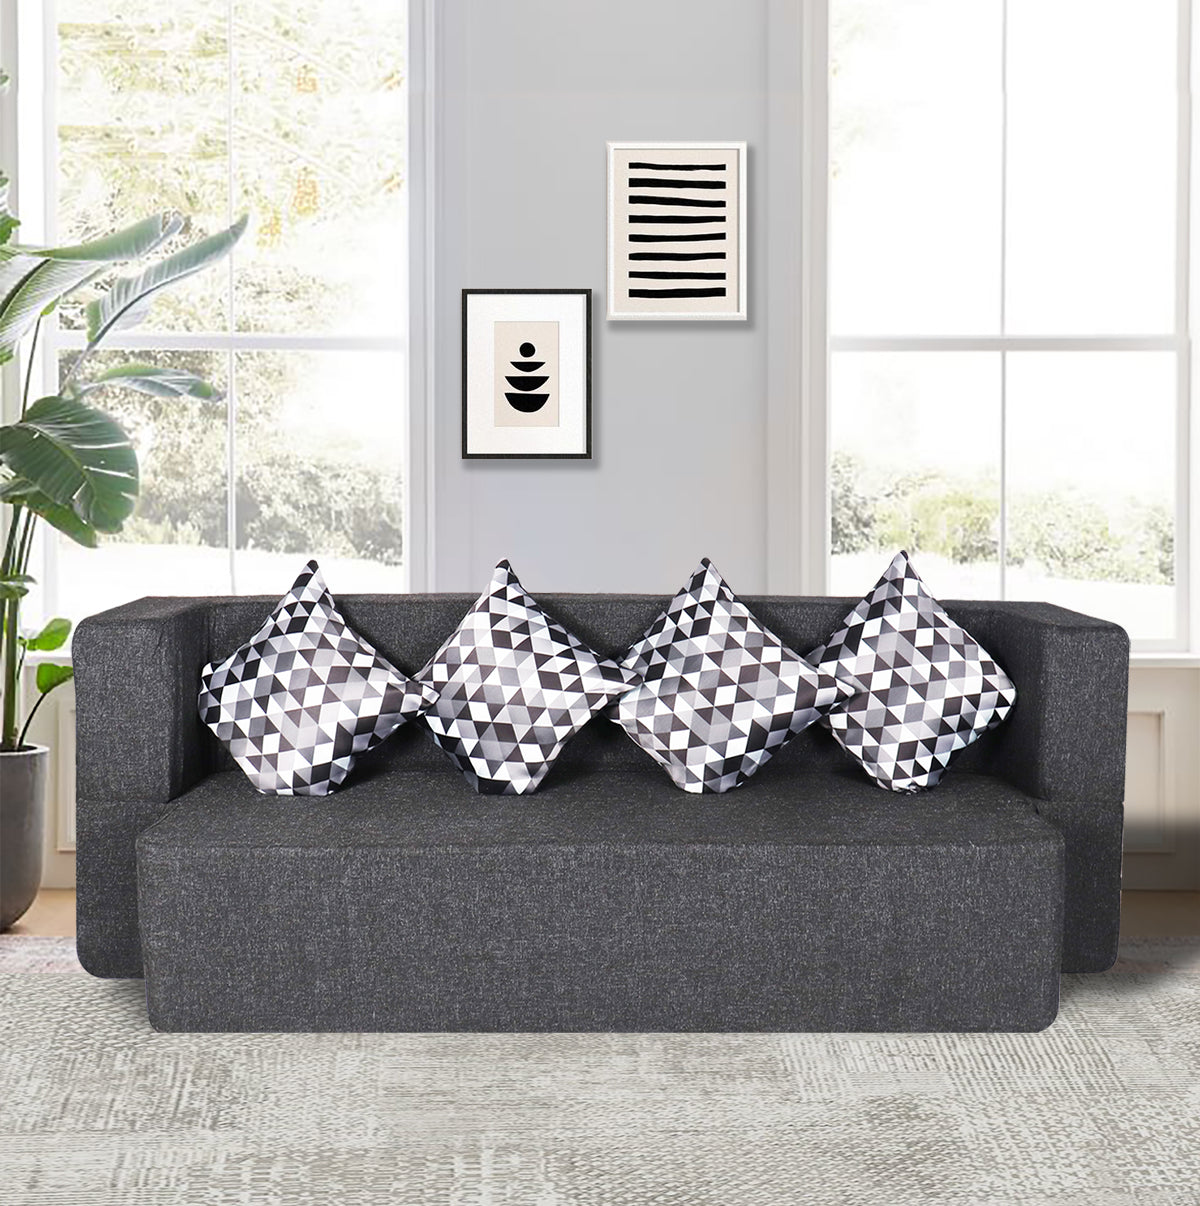 Grey Jute Fabric (78"x36"x14") FlipperX Sofa cum Bed with 4 Printed Cushions